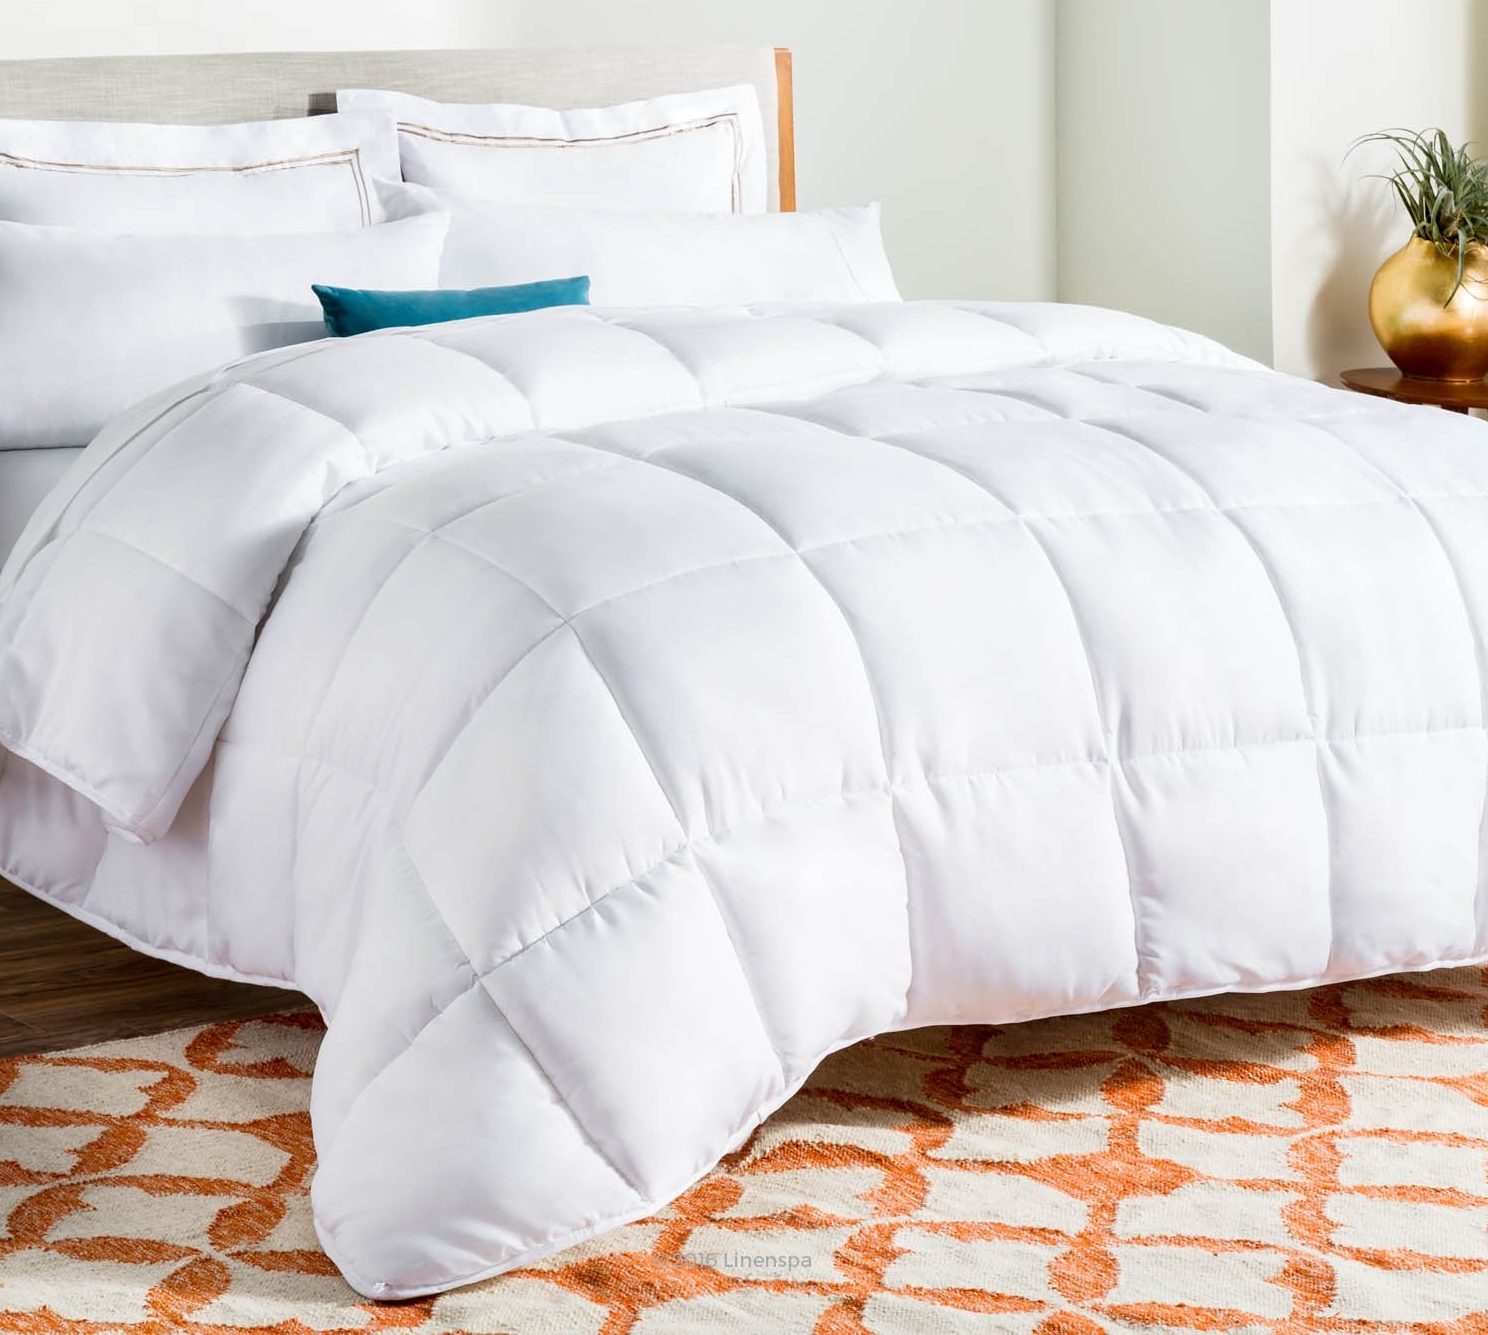 Best Down Comforters 2022: Linenspa All Season